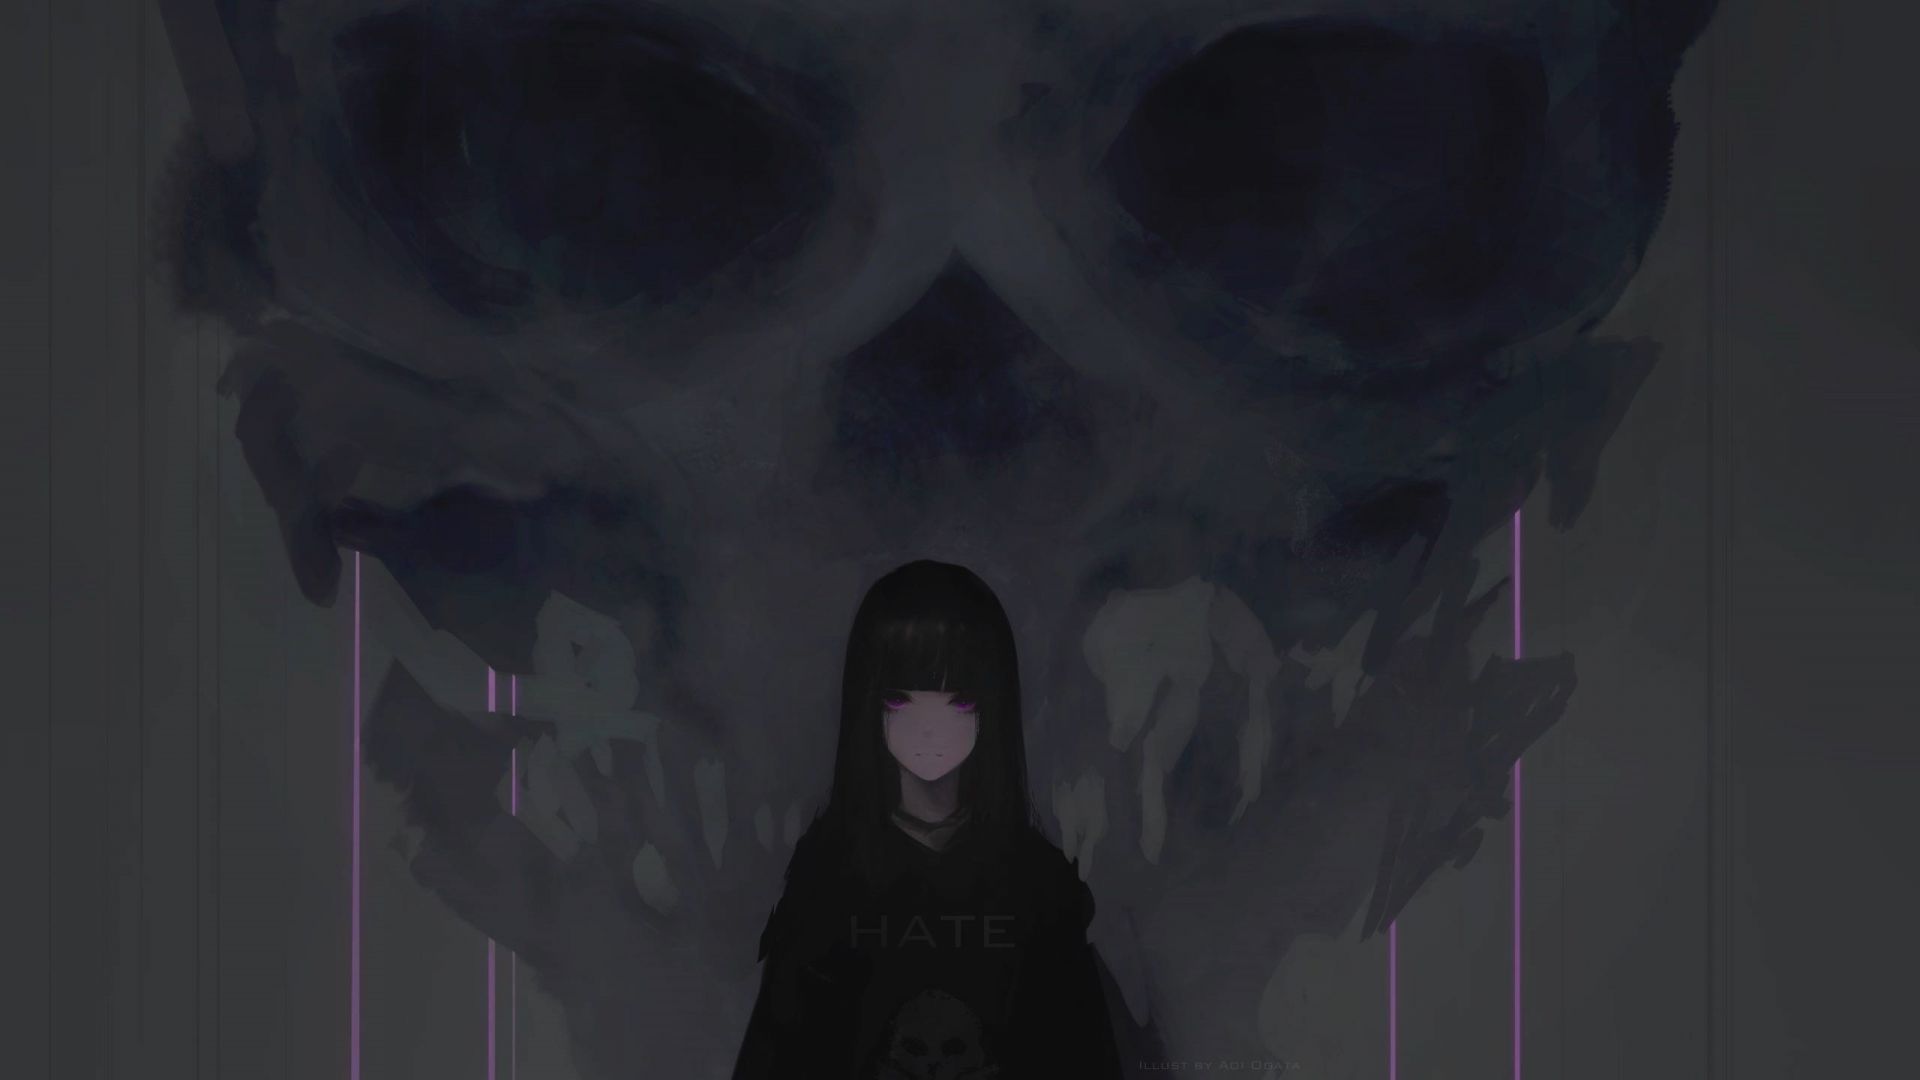 Anime girl, purple eyes, dark, skull wallpaper, HD image, picture, background, b59bef